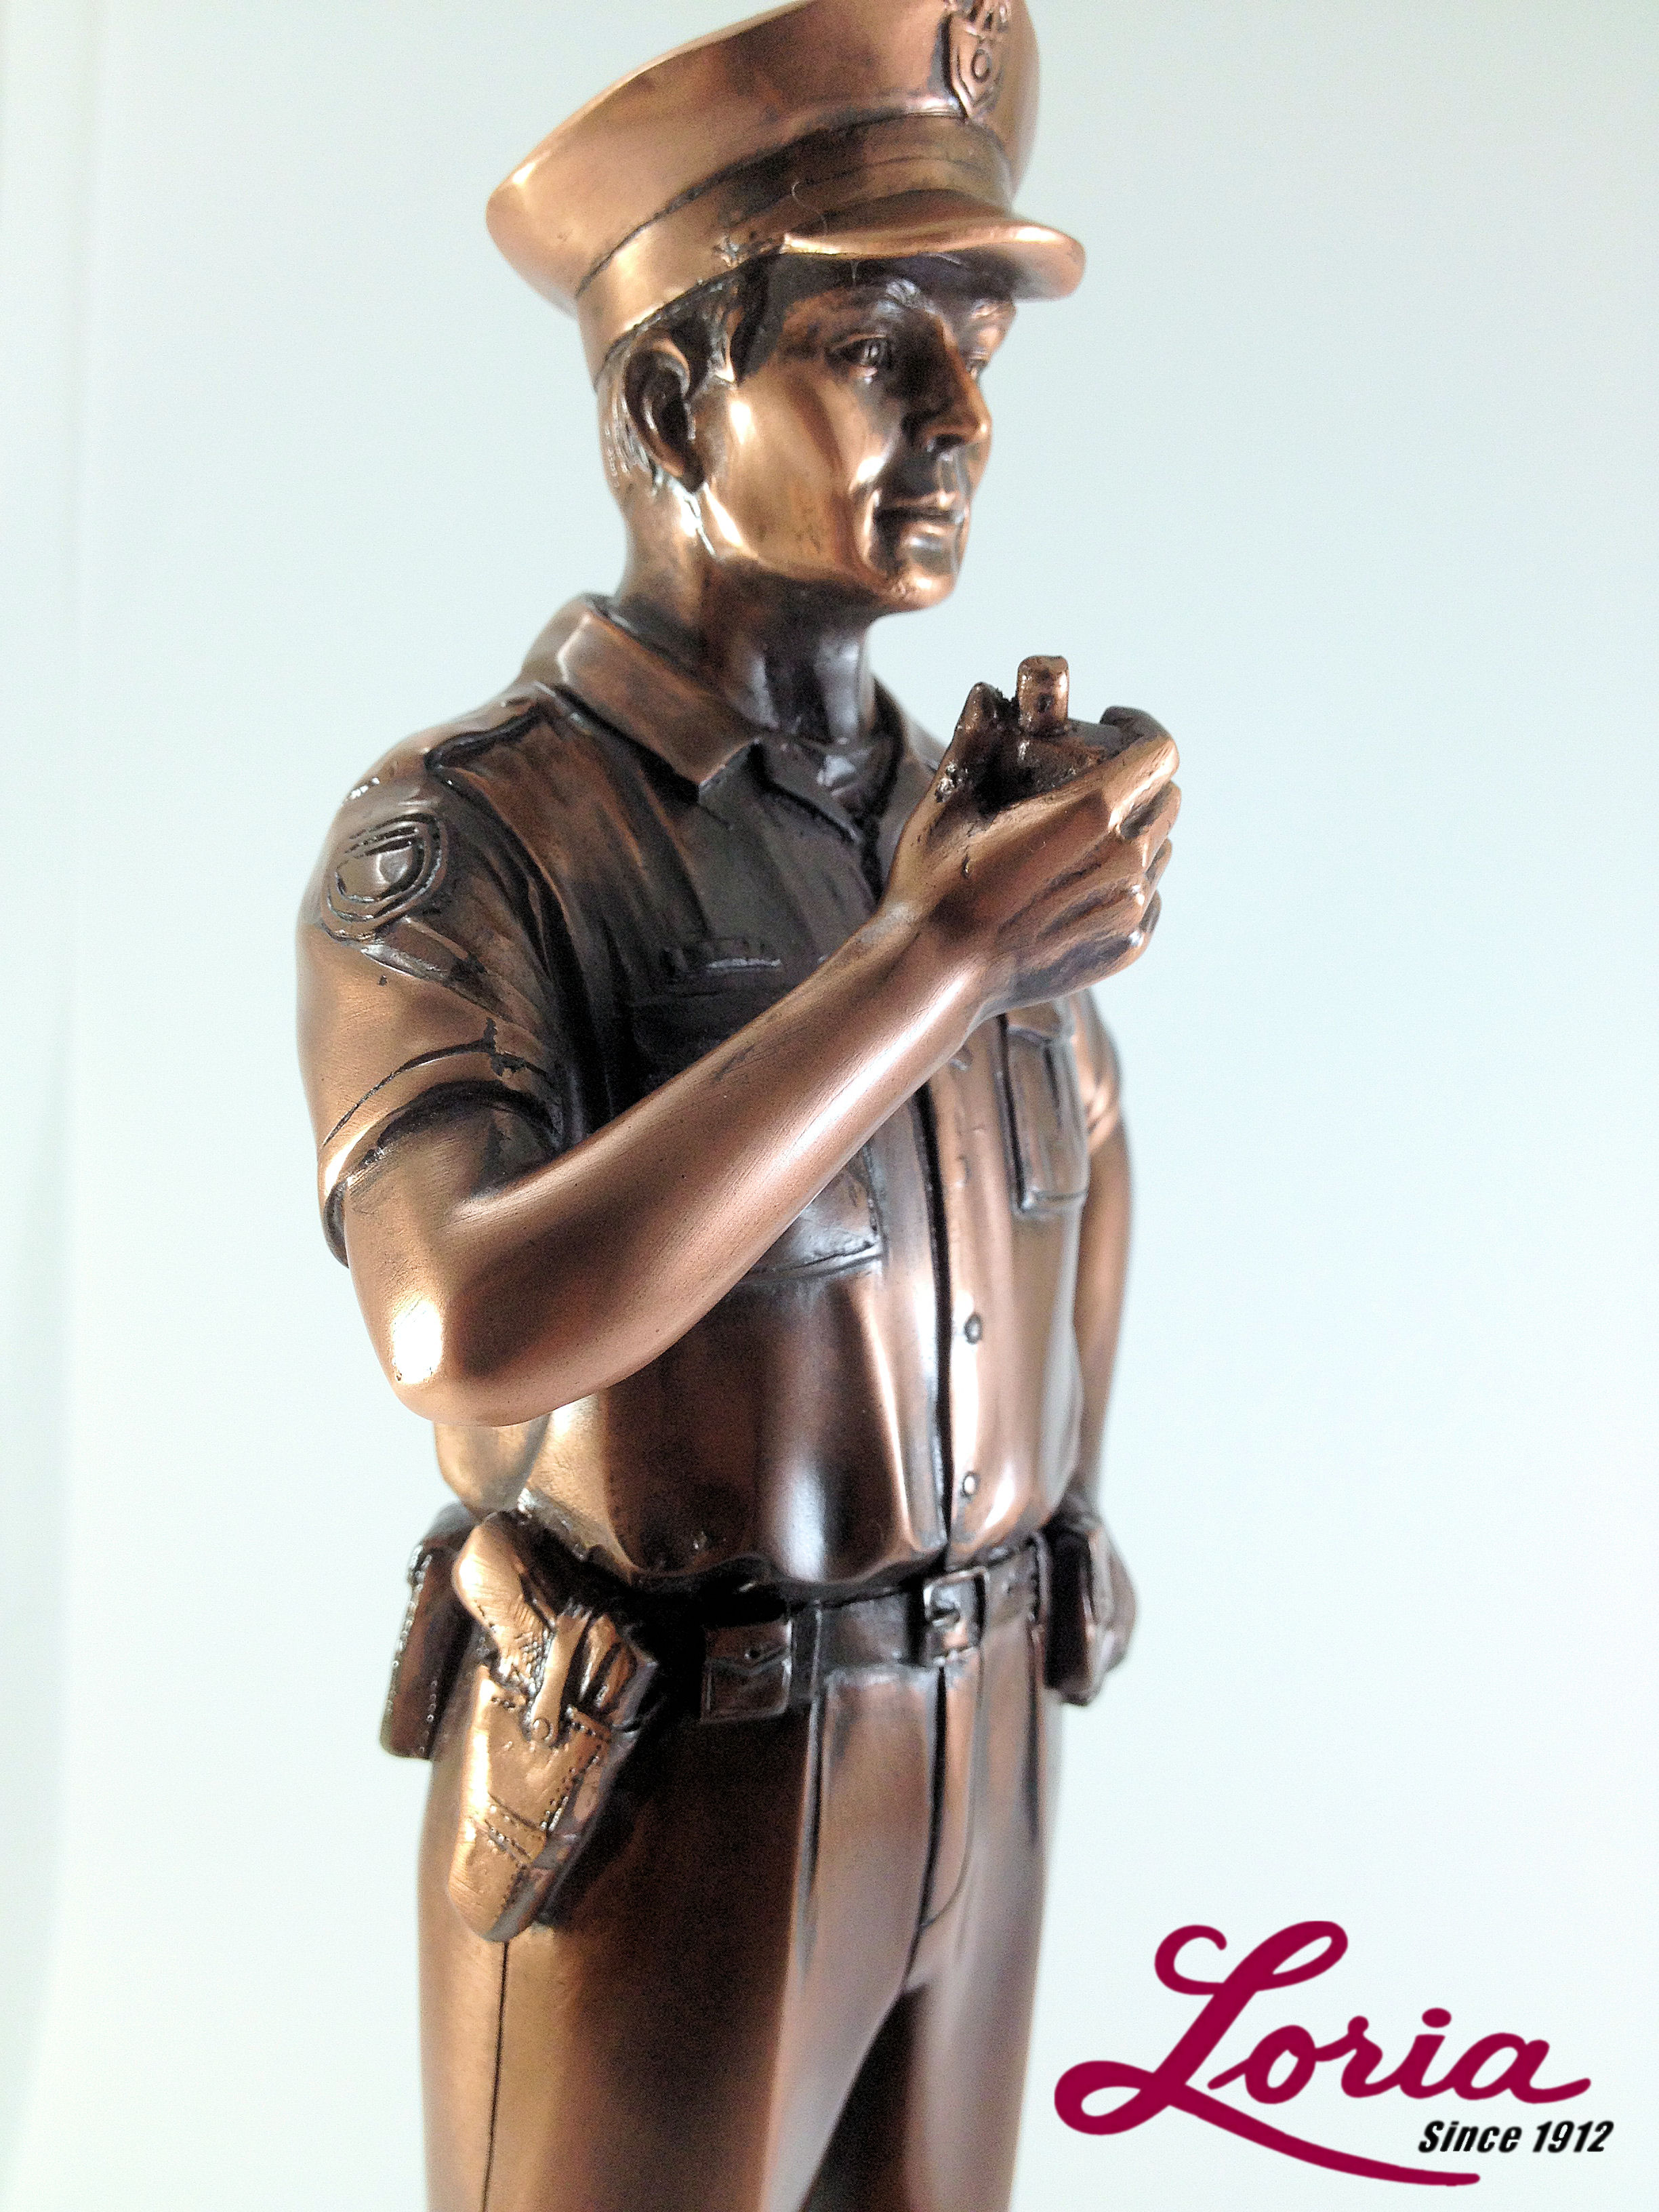 Police Officer Statue Award @ Loria Awards